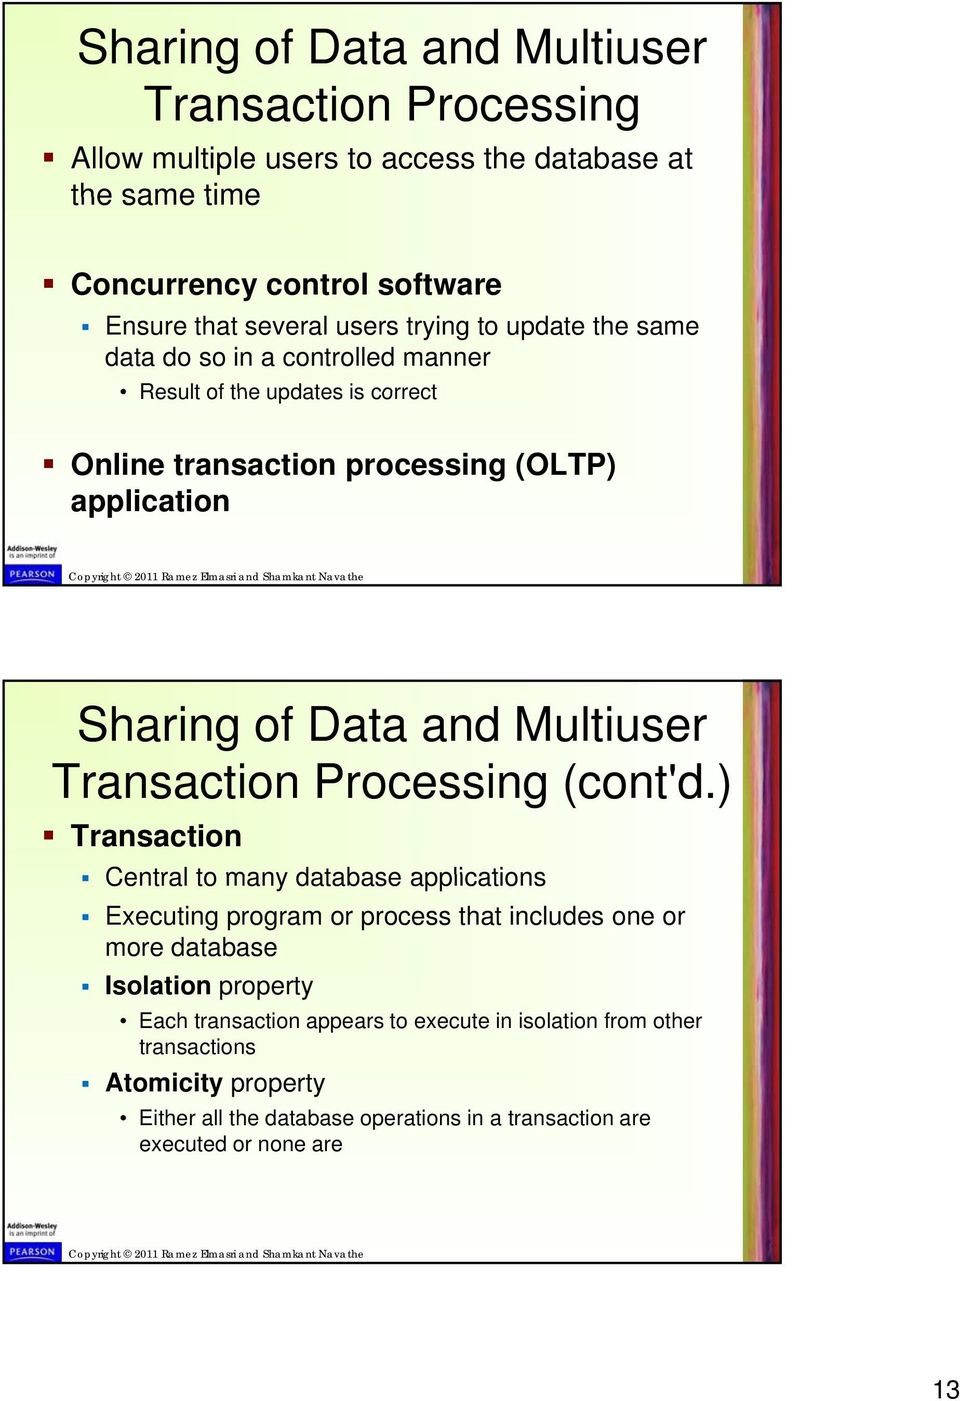 Multiuser Transaction Processing (cont'd.